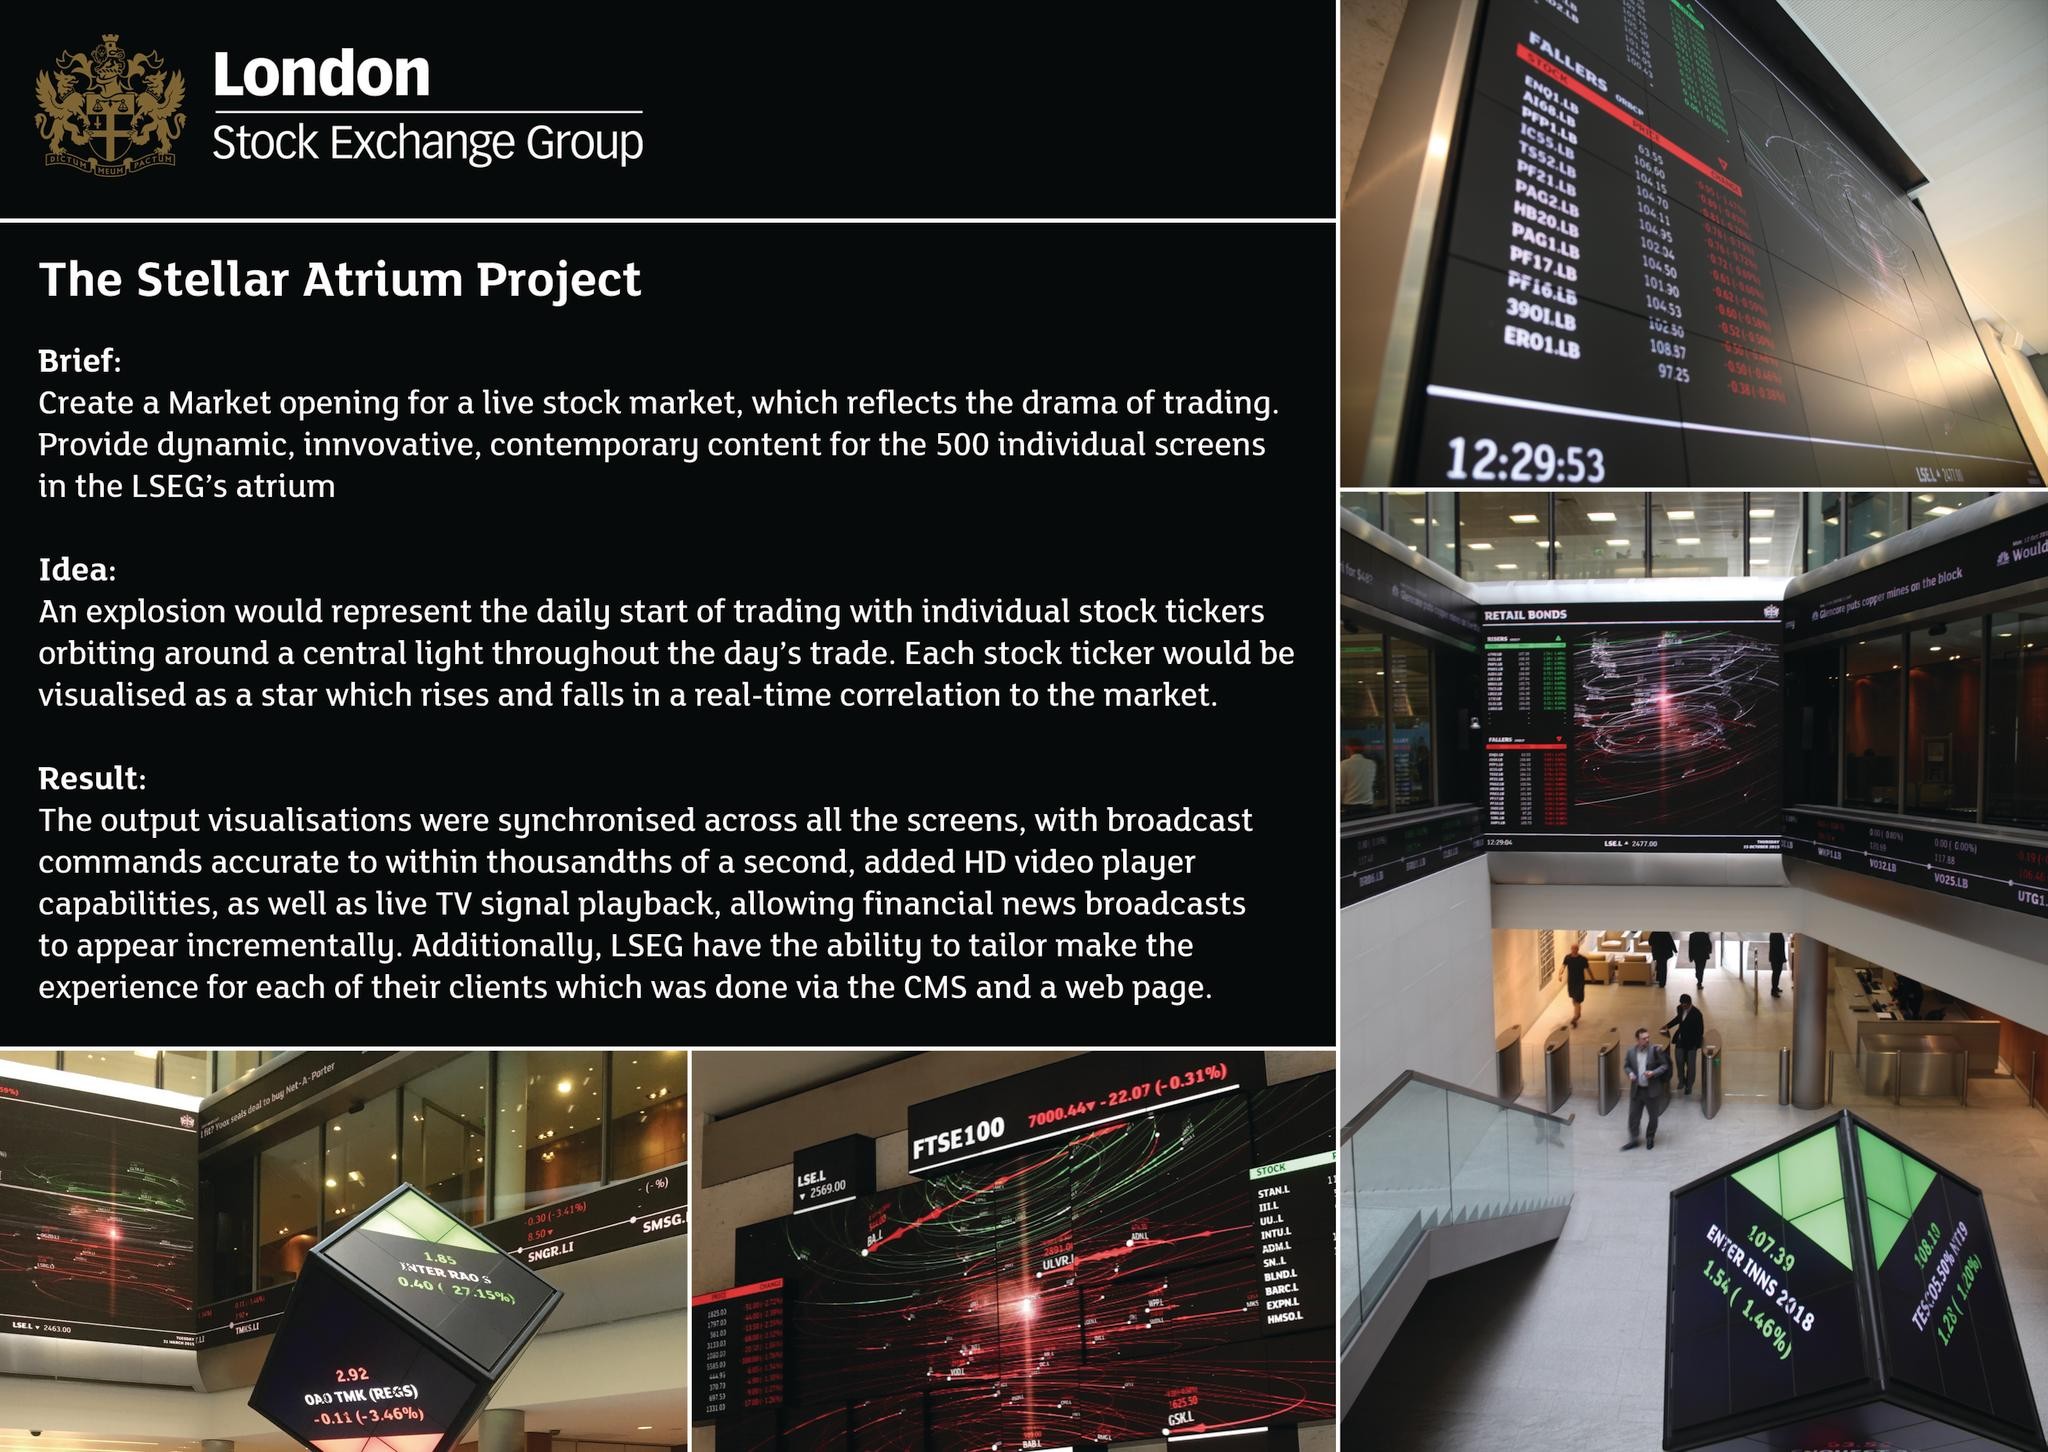 London Stock Exchange 'The Stellar Atrium Project'